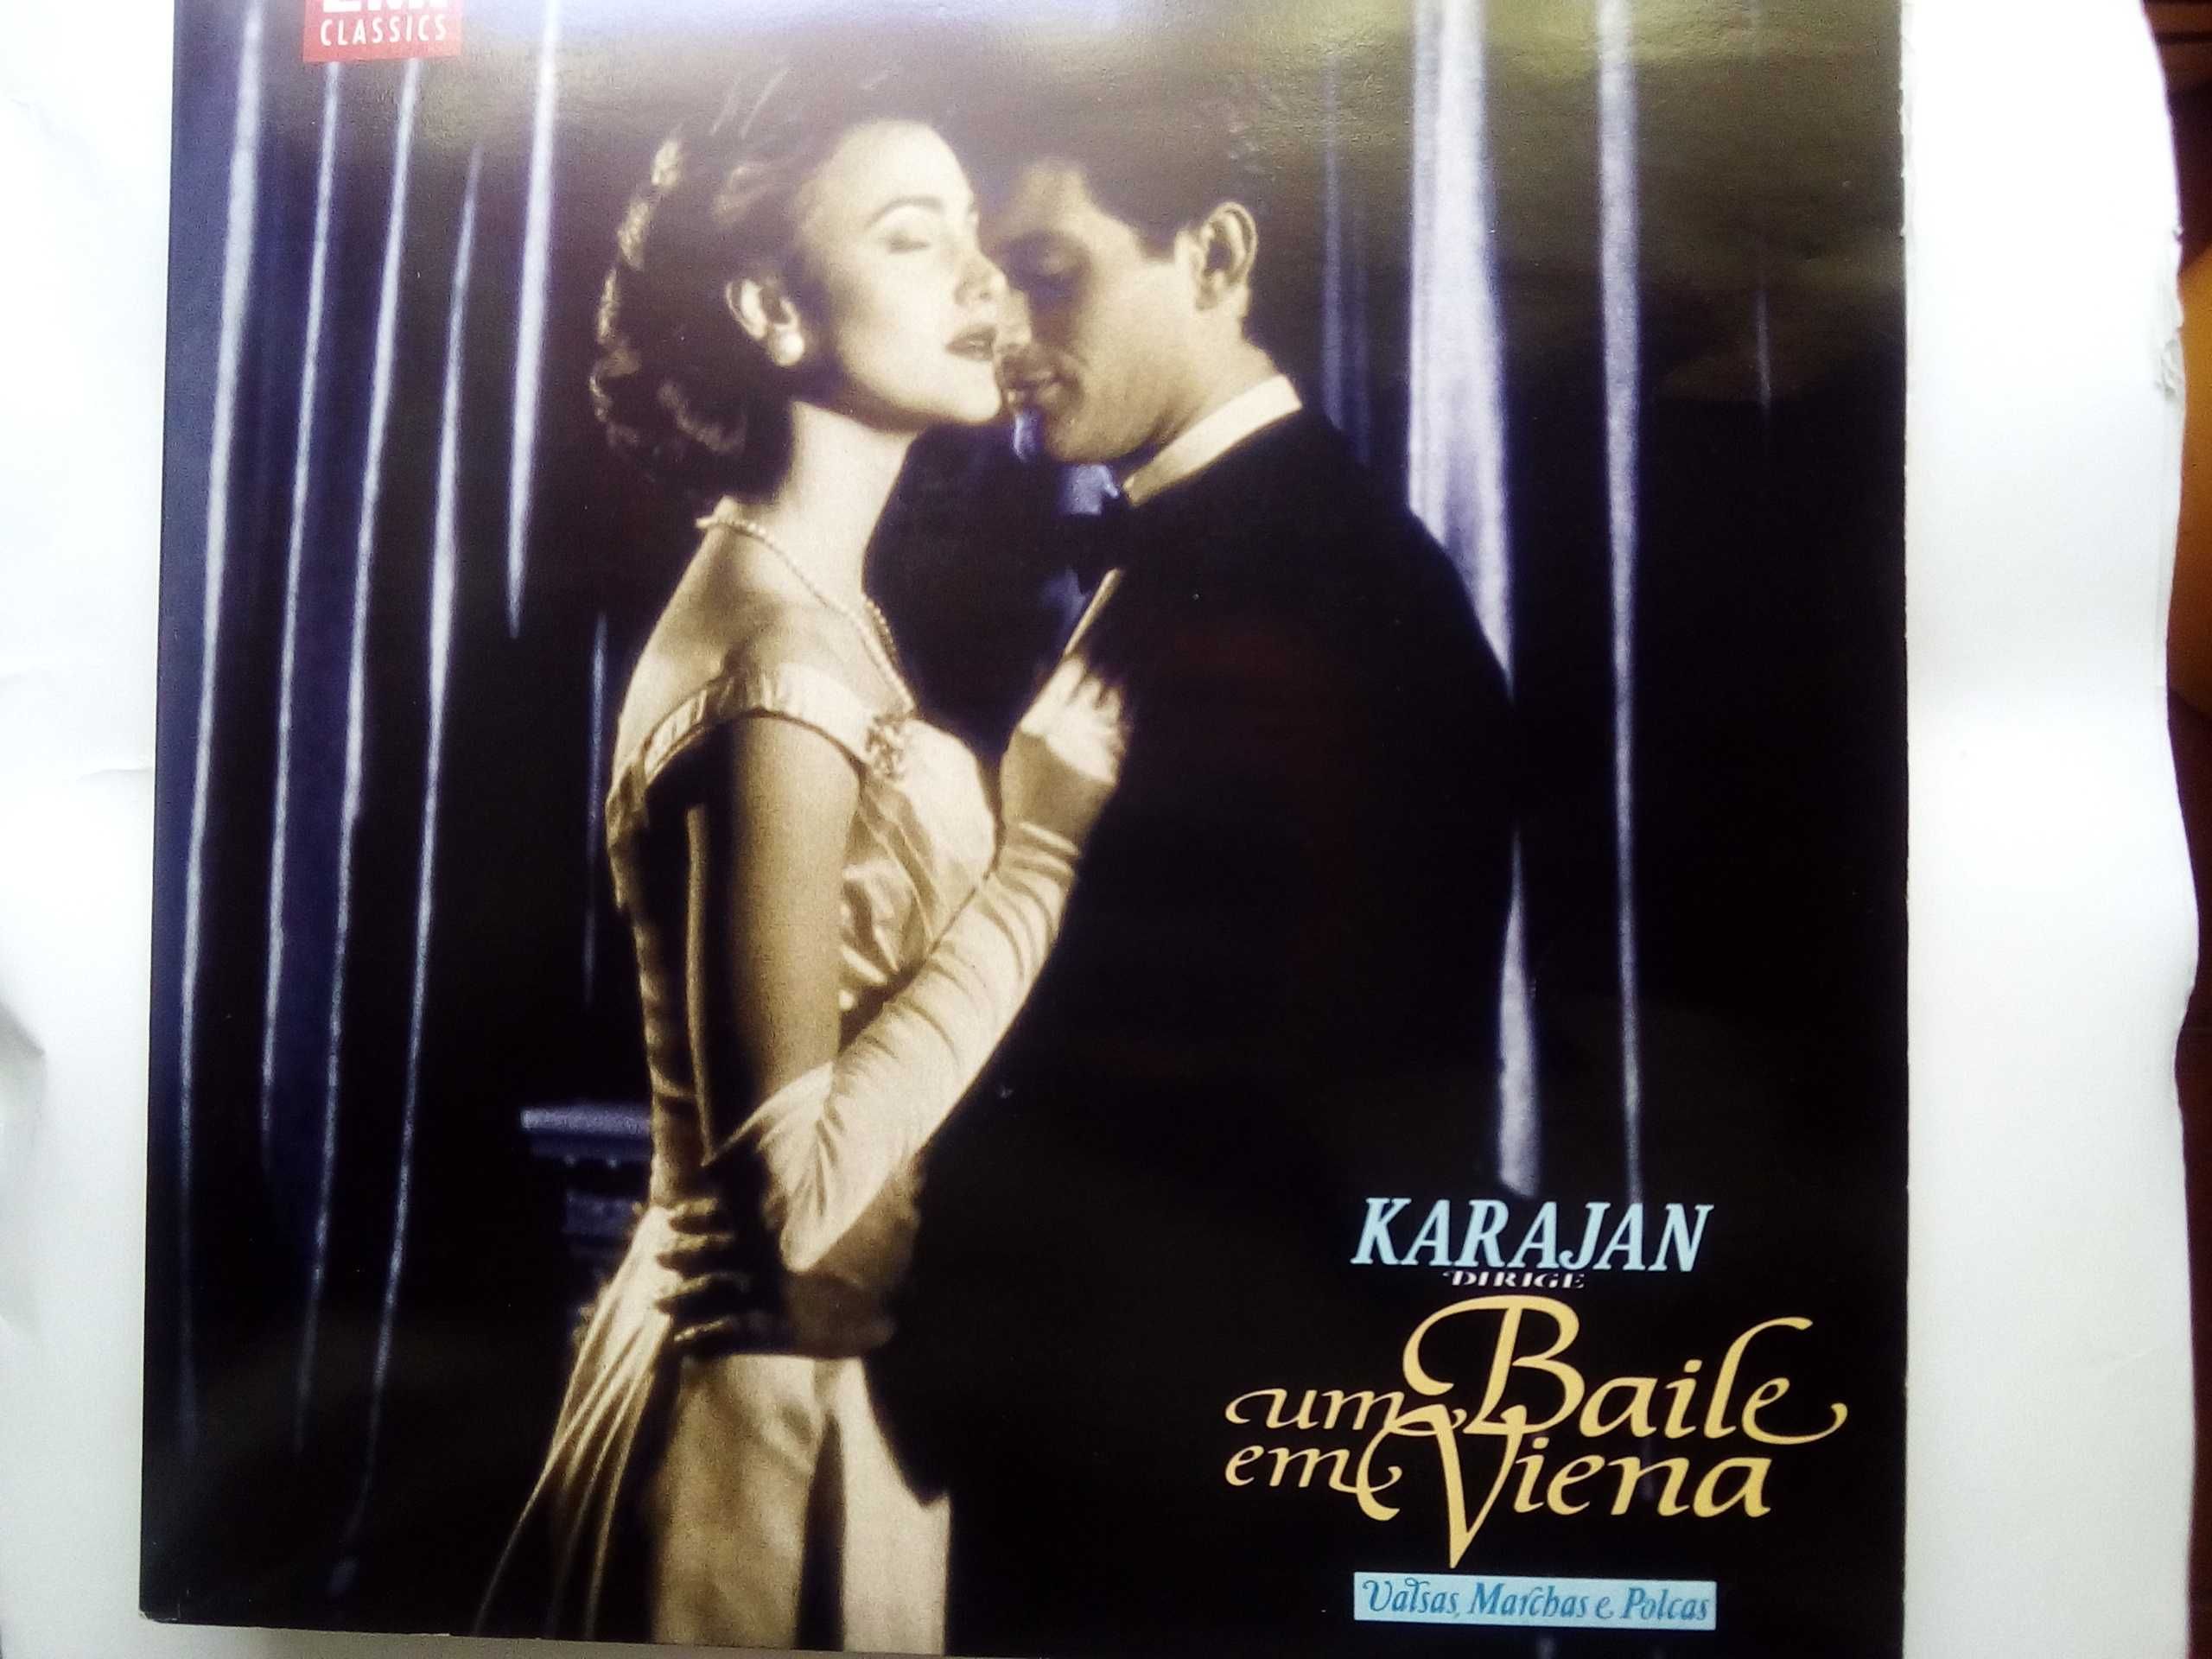 Karajan, disco vinil duplo 33 rpm, Um baile em Viena